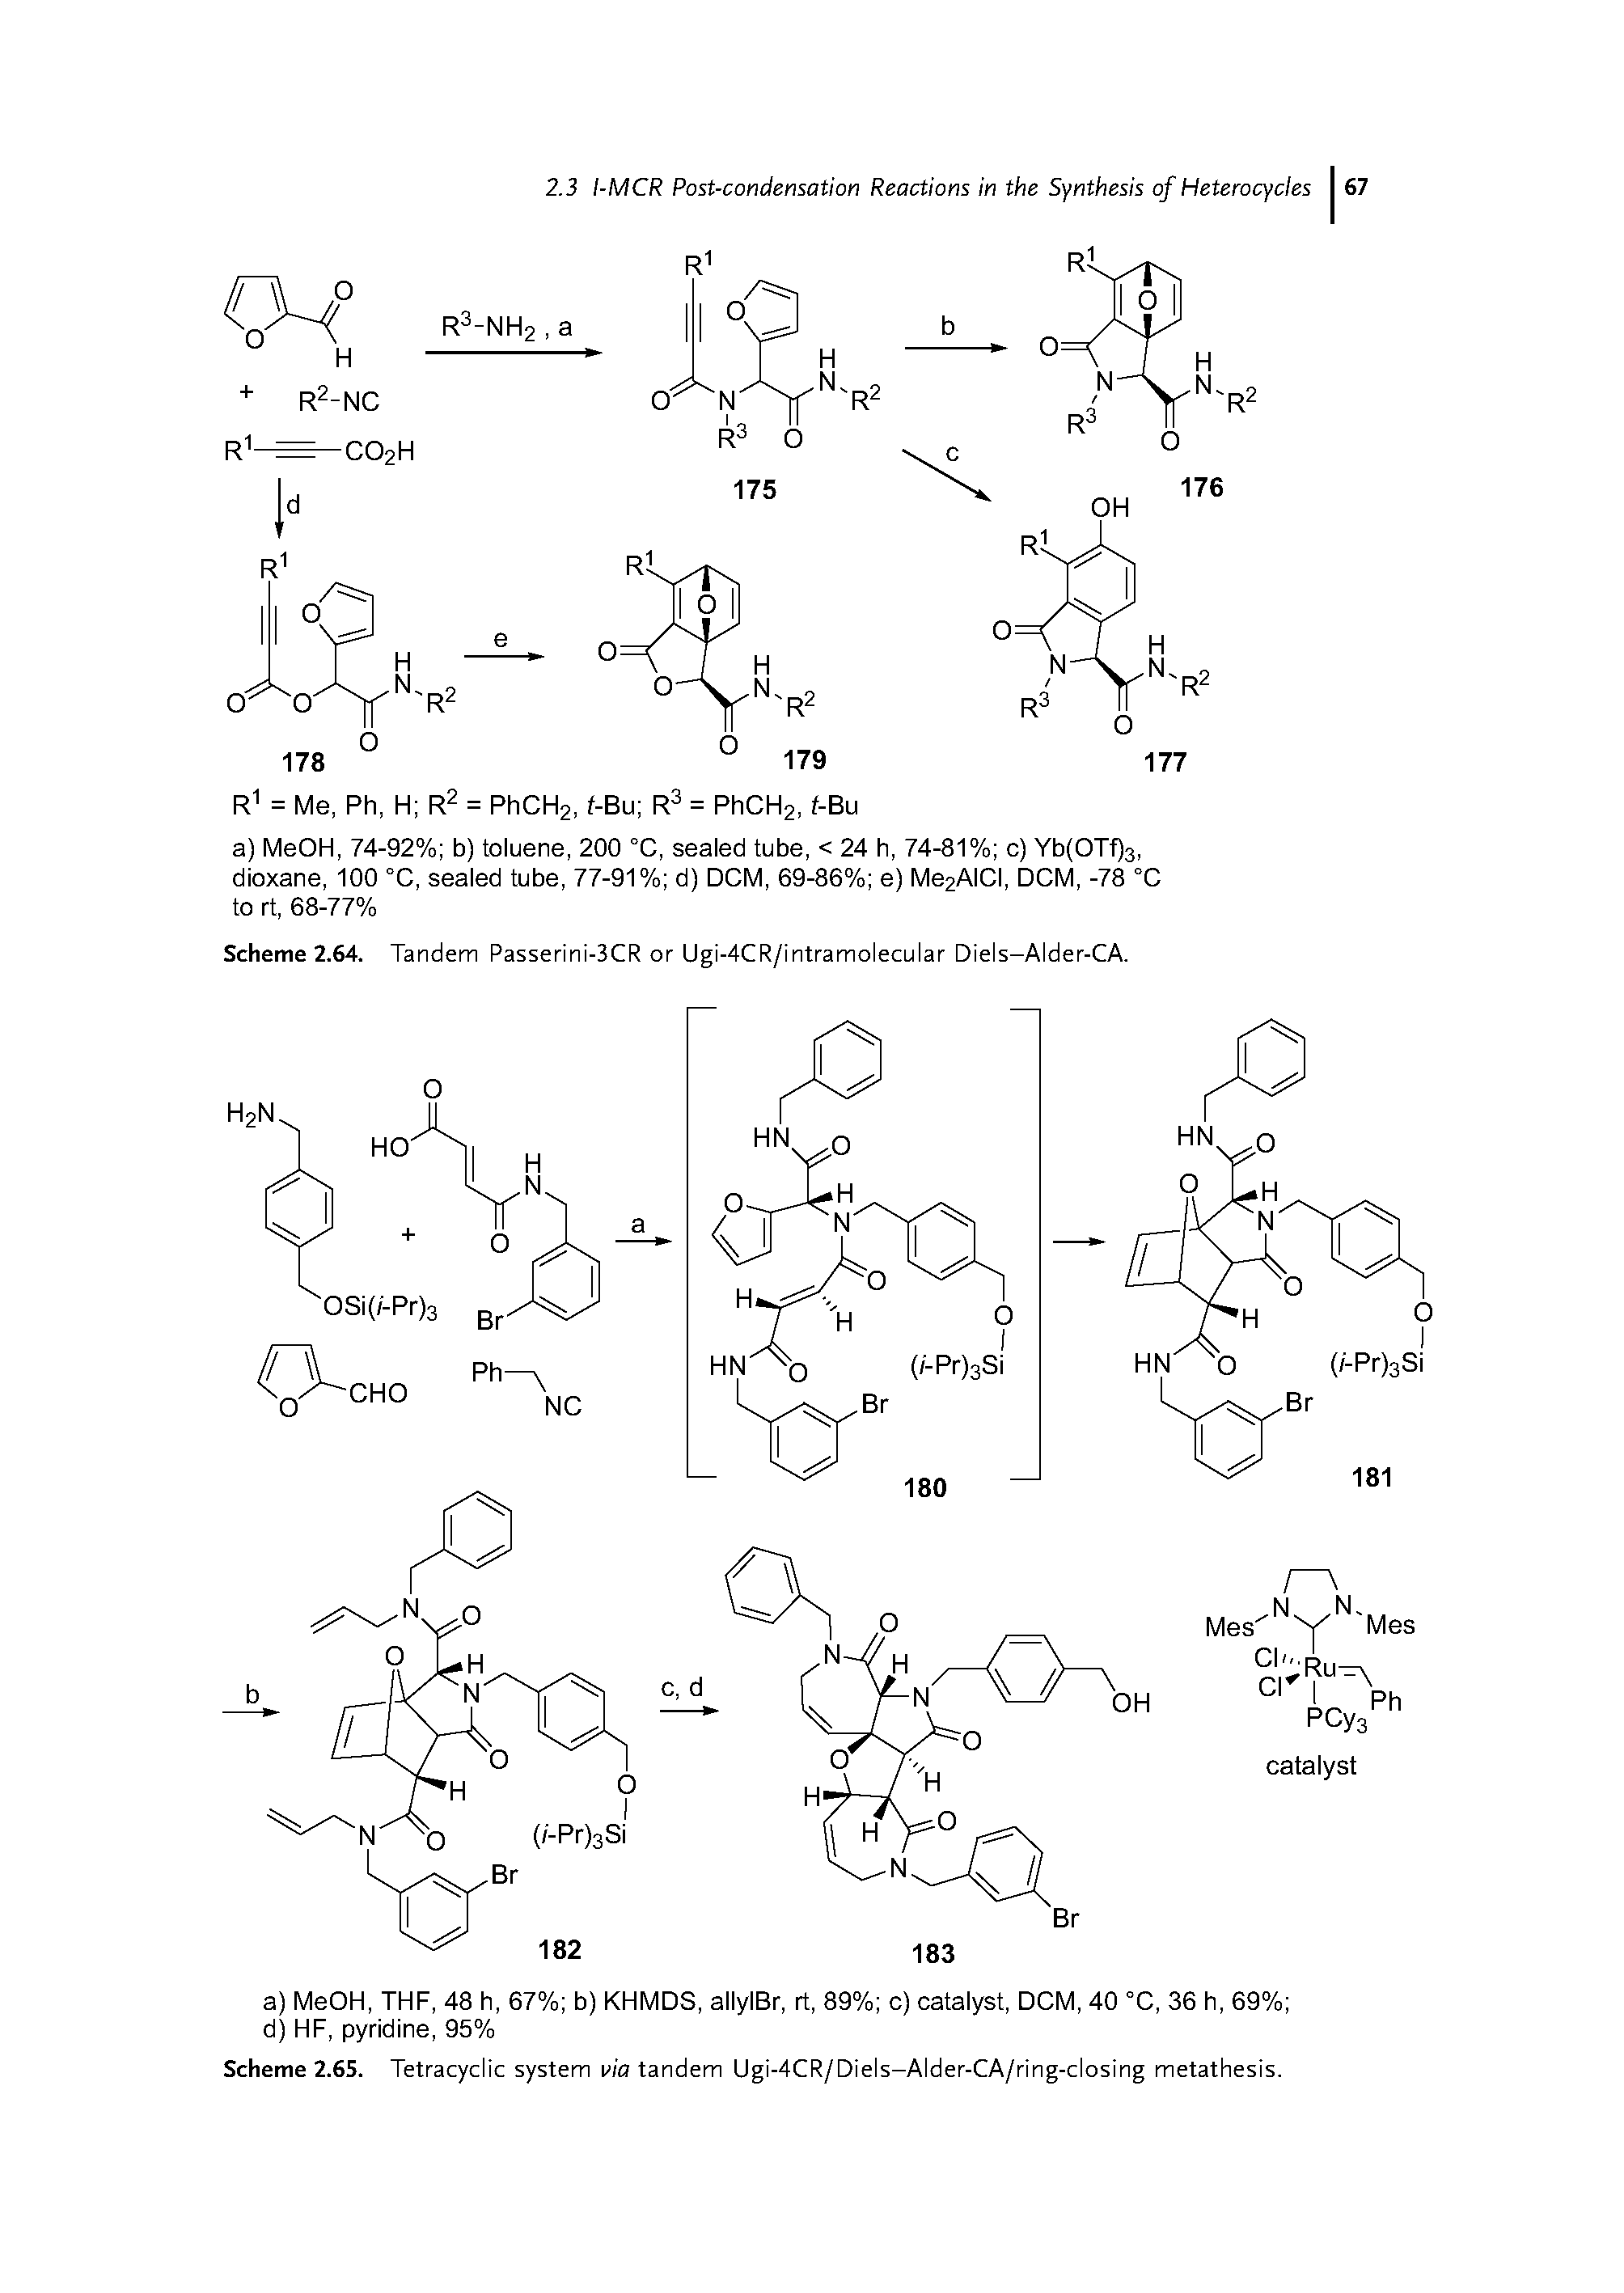 Scheme 2.65. Tetracyclic system via tandem Ugi-4CR/Diels-Alder-CA/ring-closing metathesis.